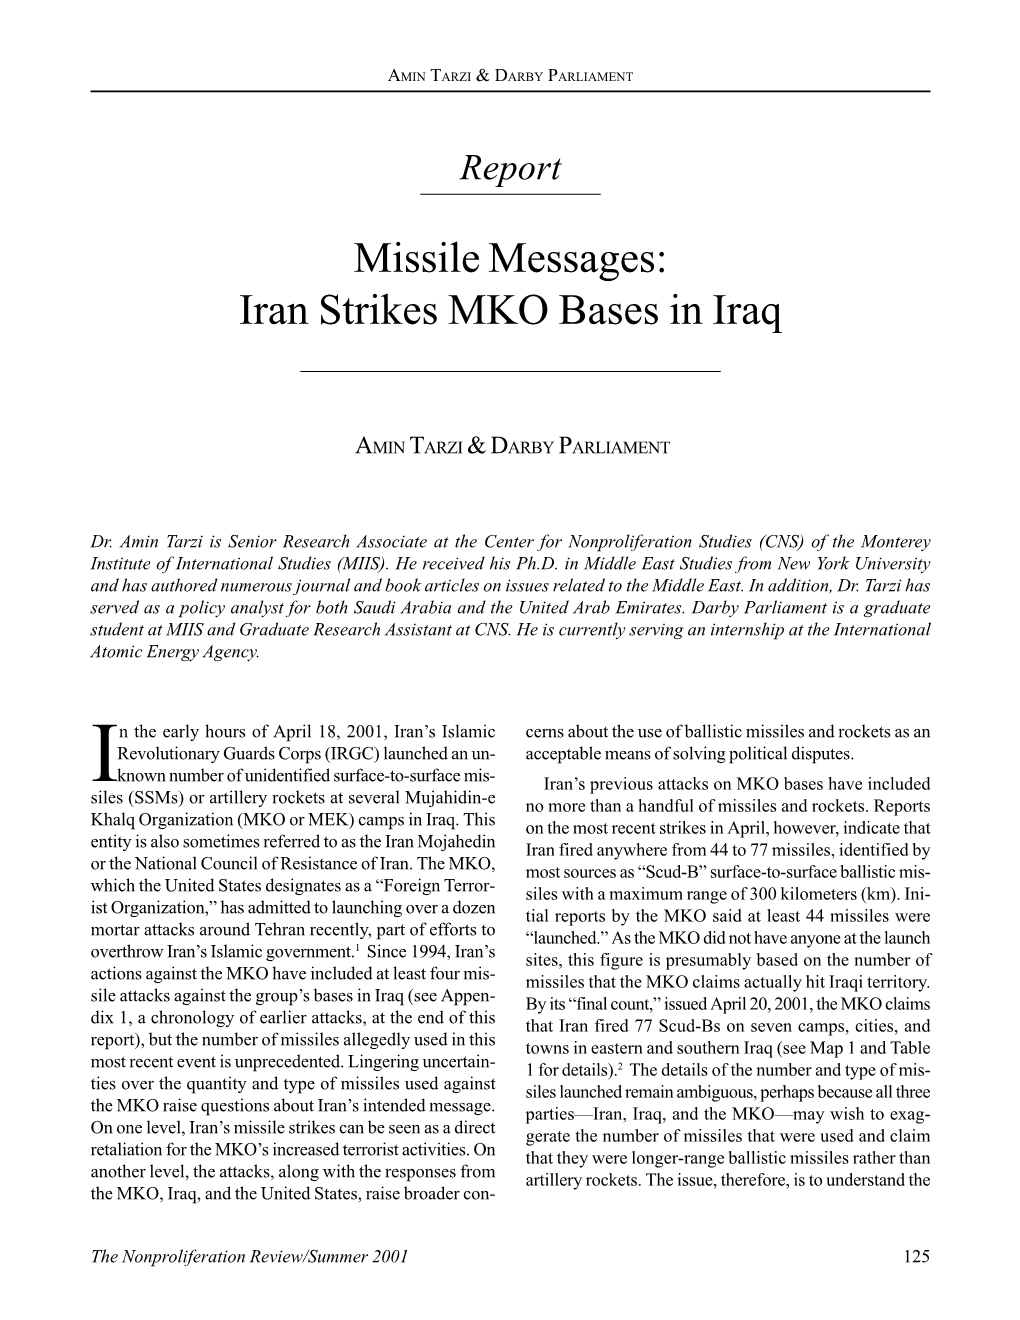 Iran Strikes MKO Bases in Iraq